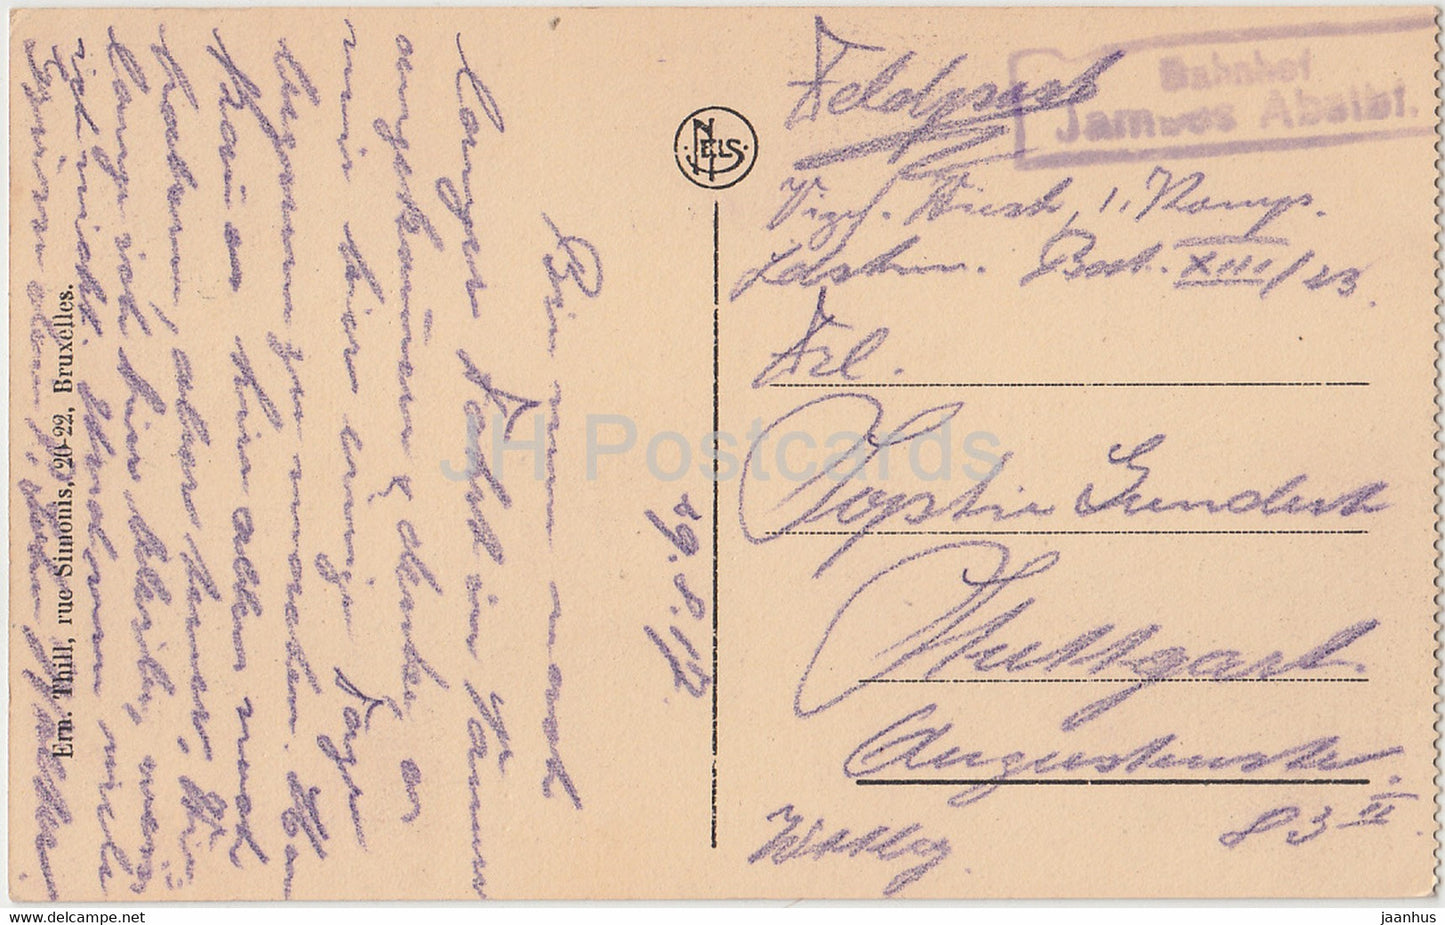 Namur - La Sambre et Panorama - Feldpost - alte Postkarte - 1917 - Belgien - gebraucht